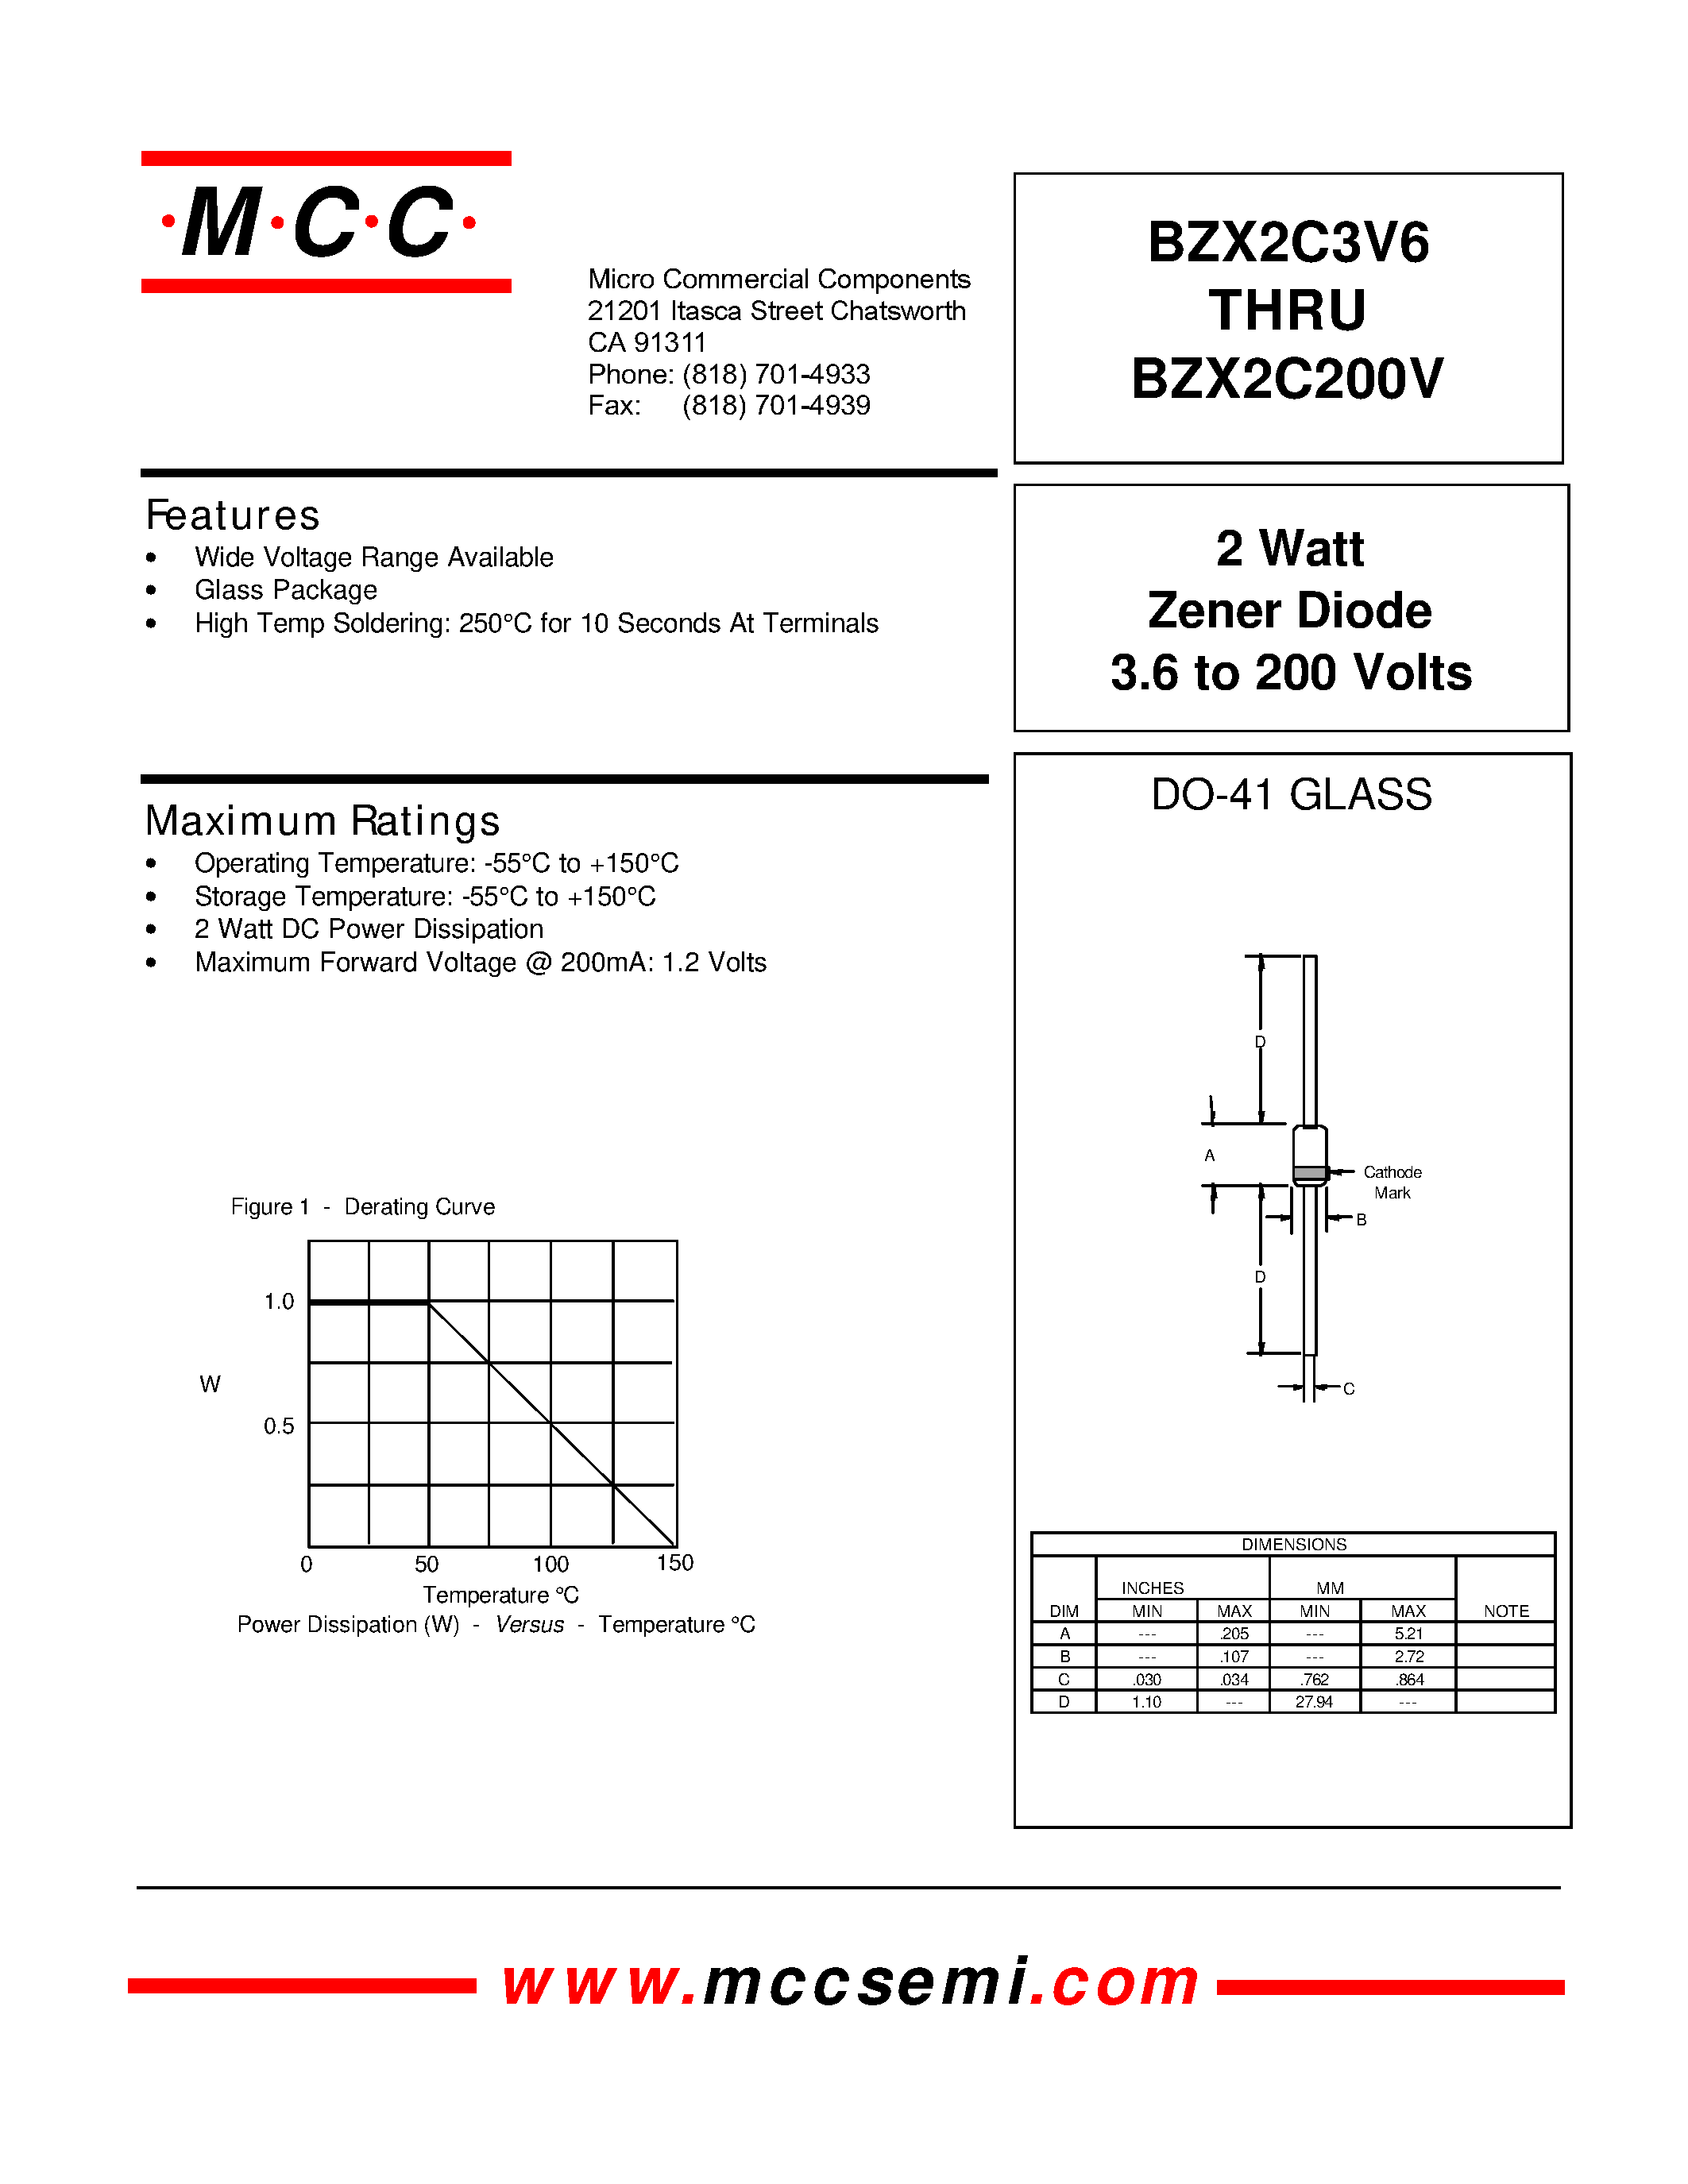 Datasheet BZX2C75V - 2 Watt Zener Diode 3.6 to 200 Volts page 1